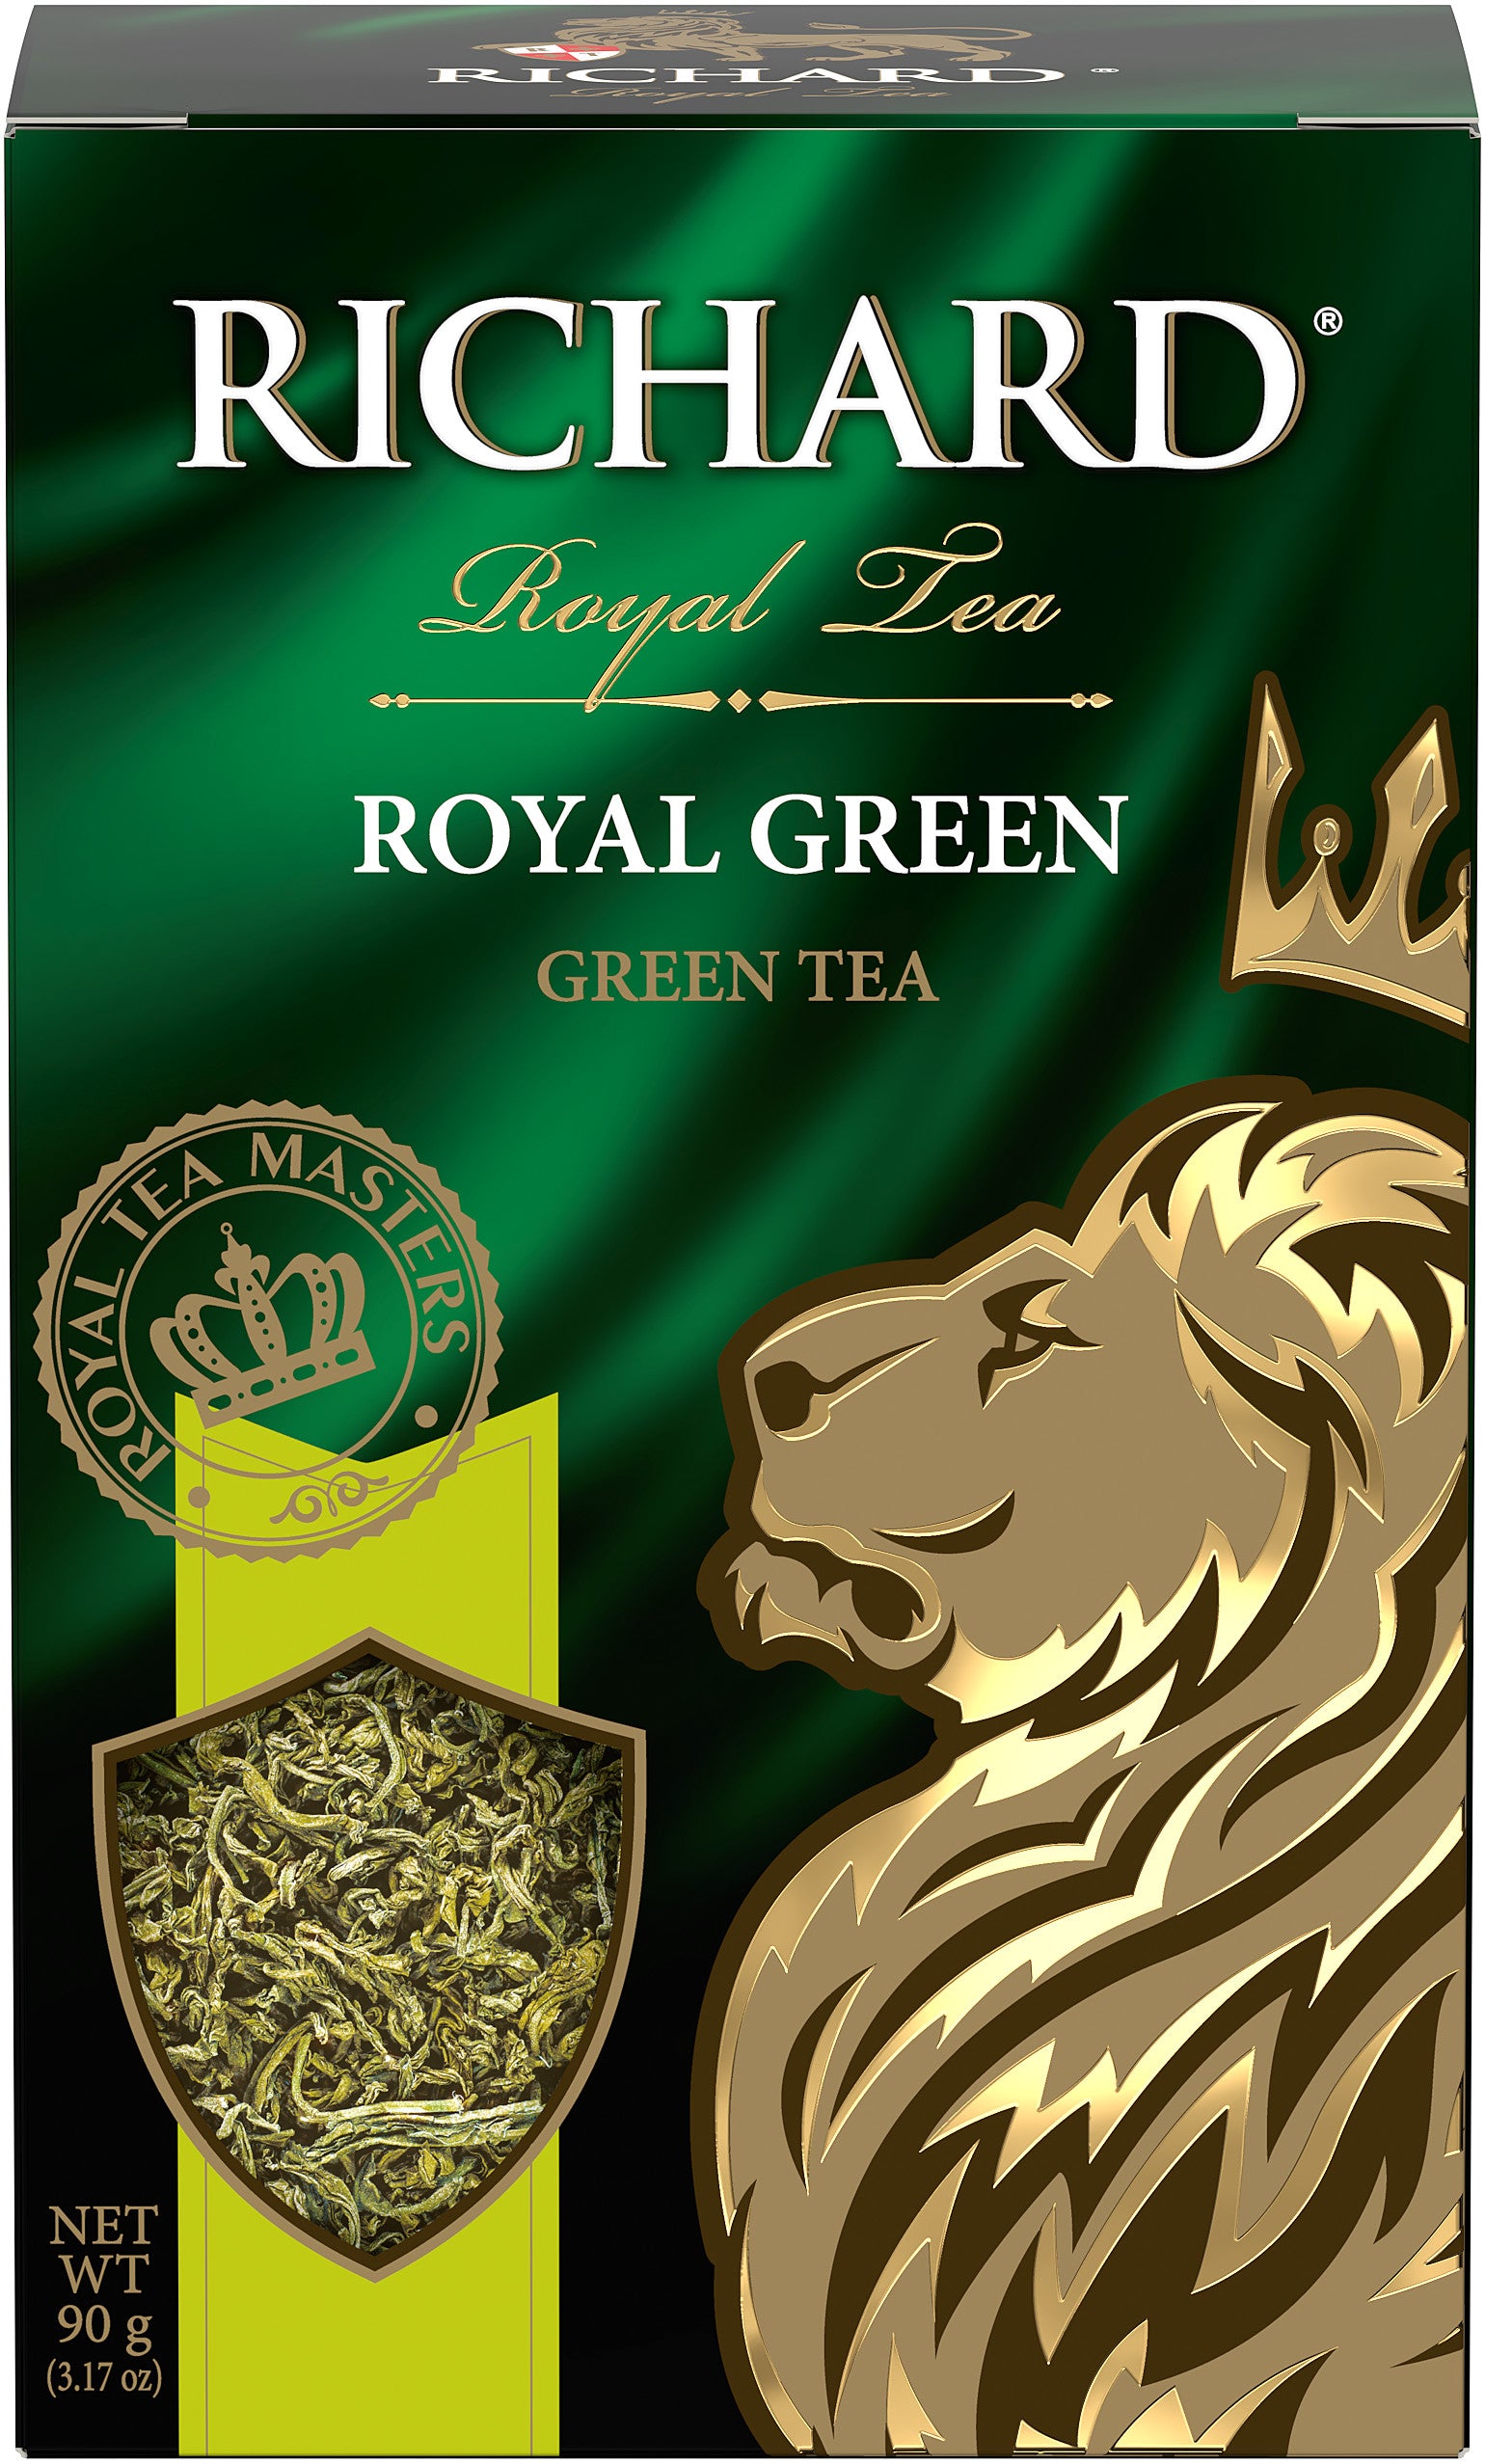 Royal Green, loose leaf green tea, 90g